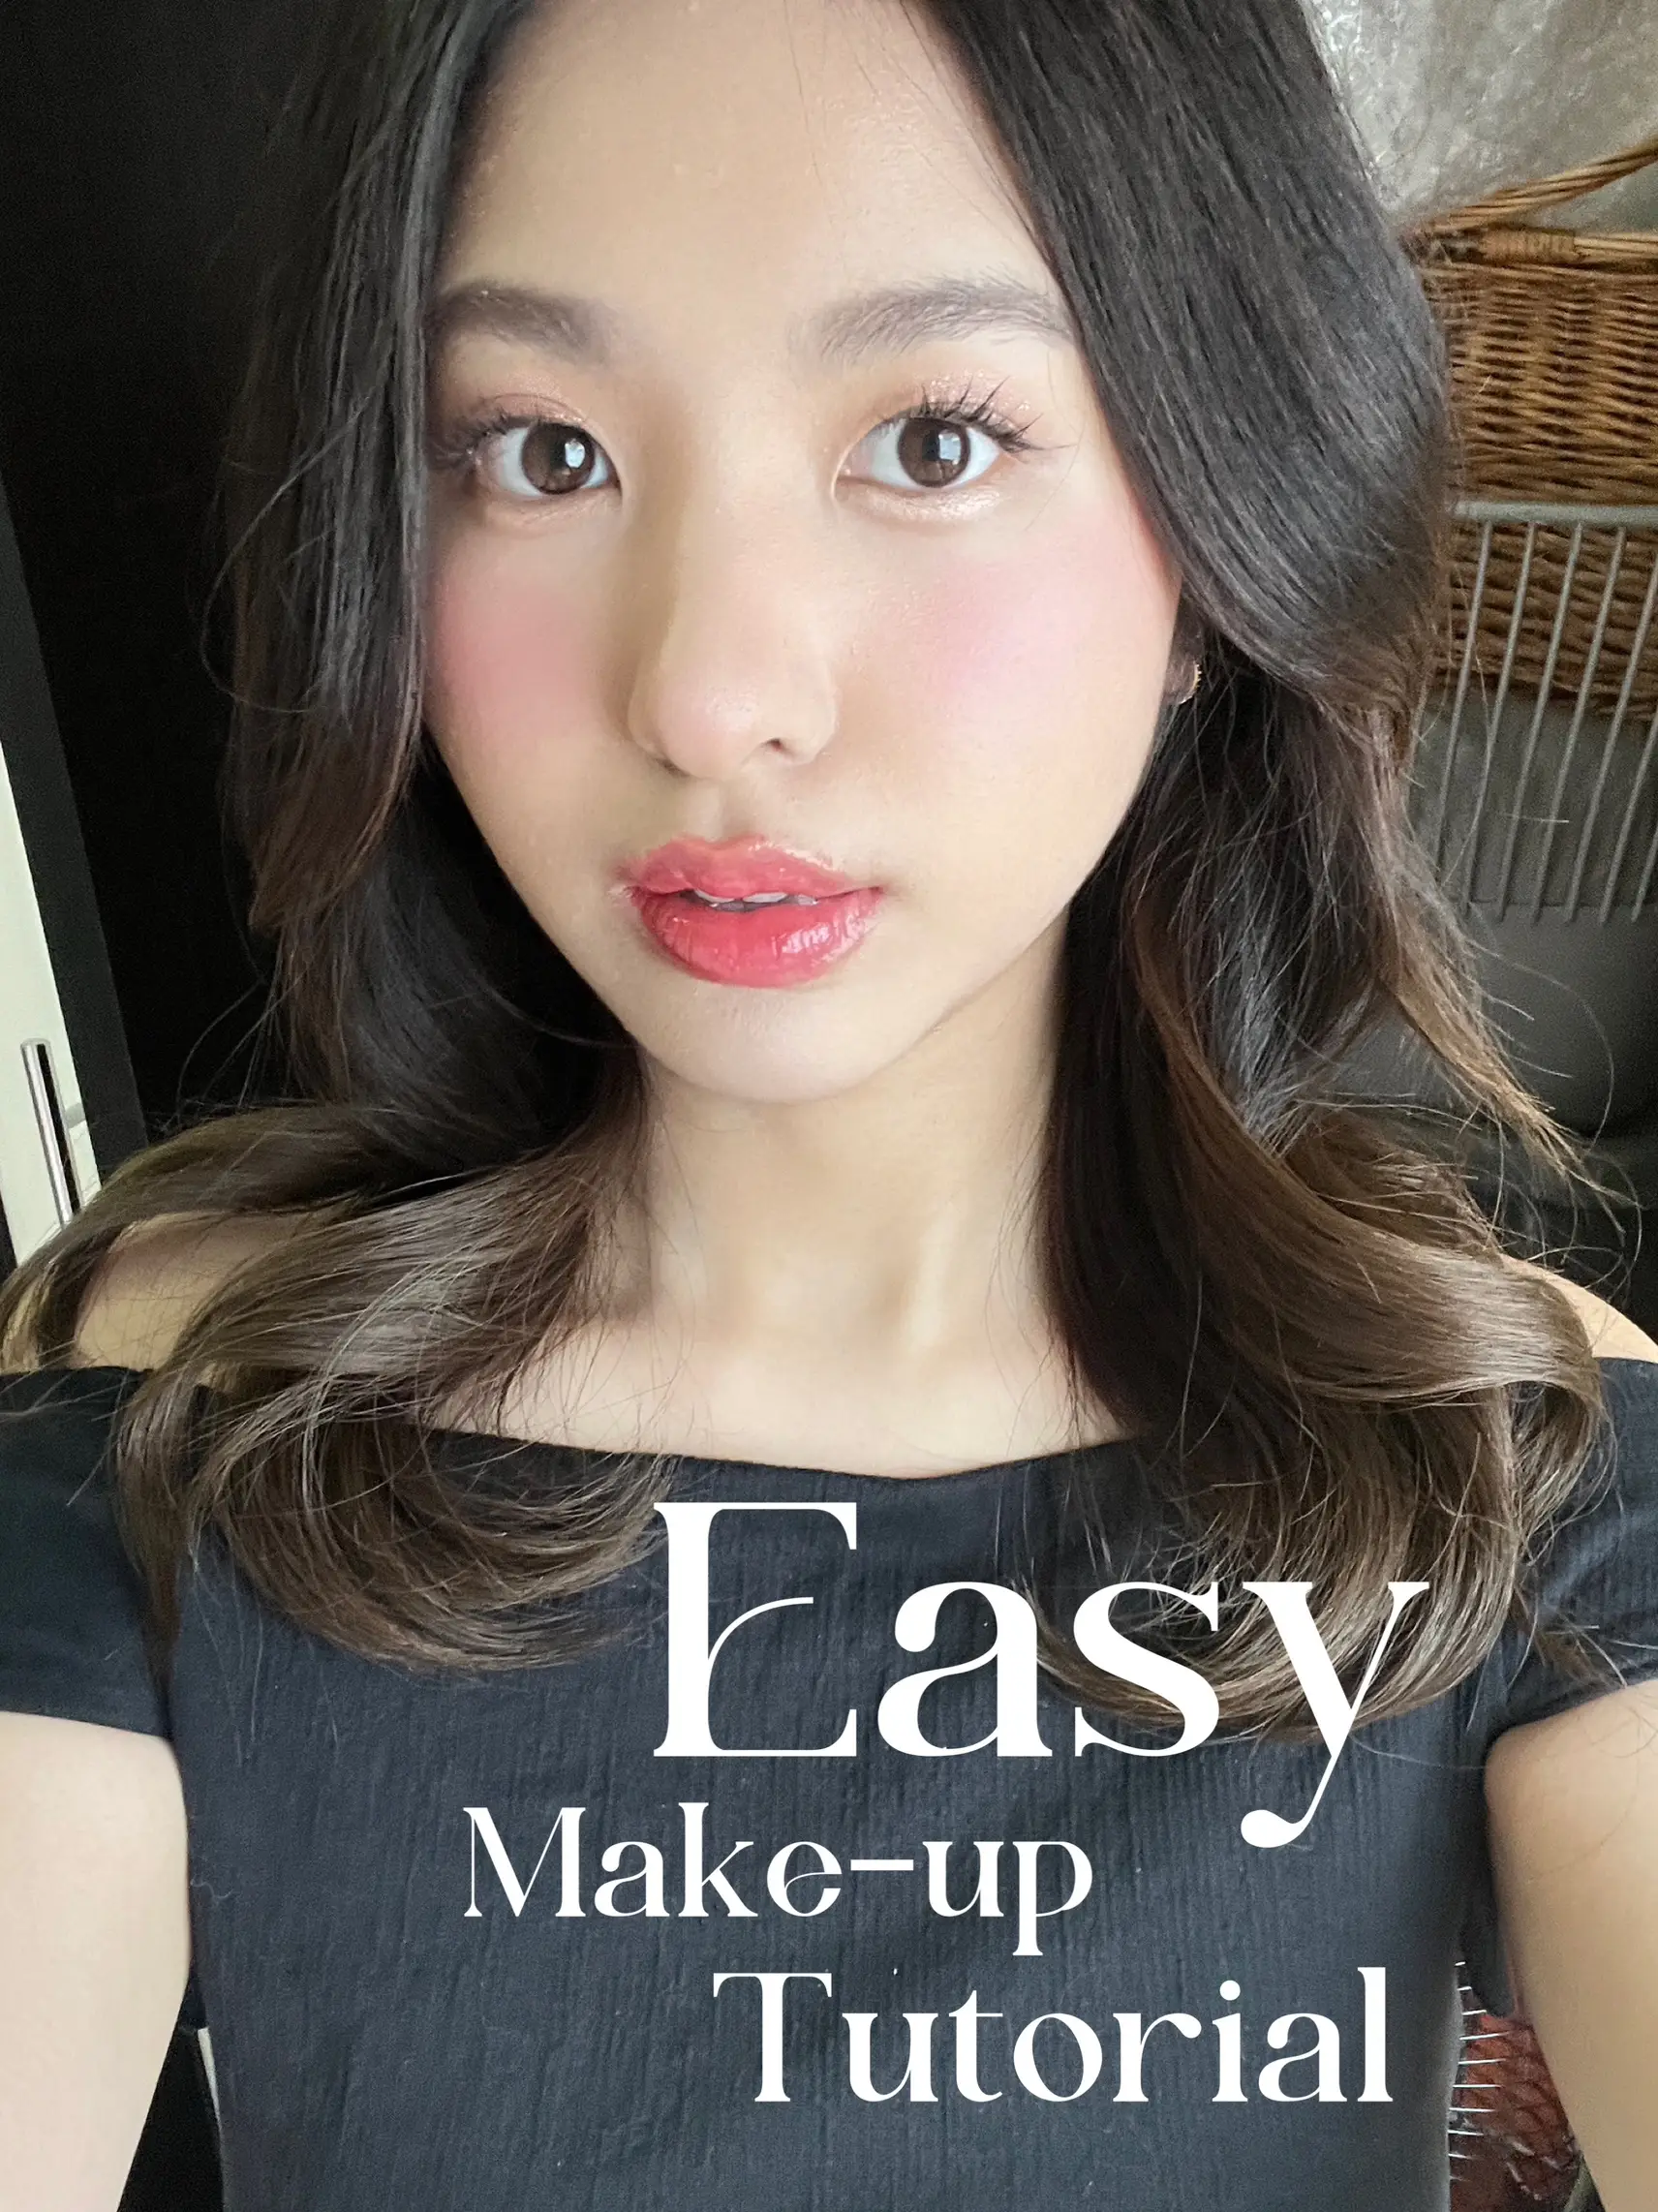 i love this makeup look, its so simple and cute! #makeuptutorial #make, soft makeup